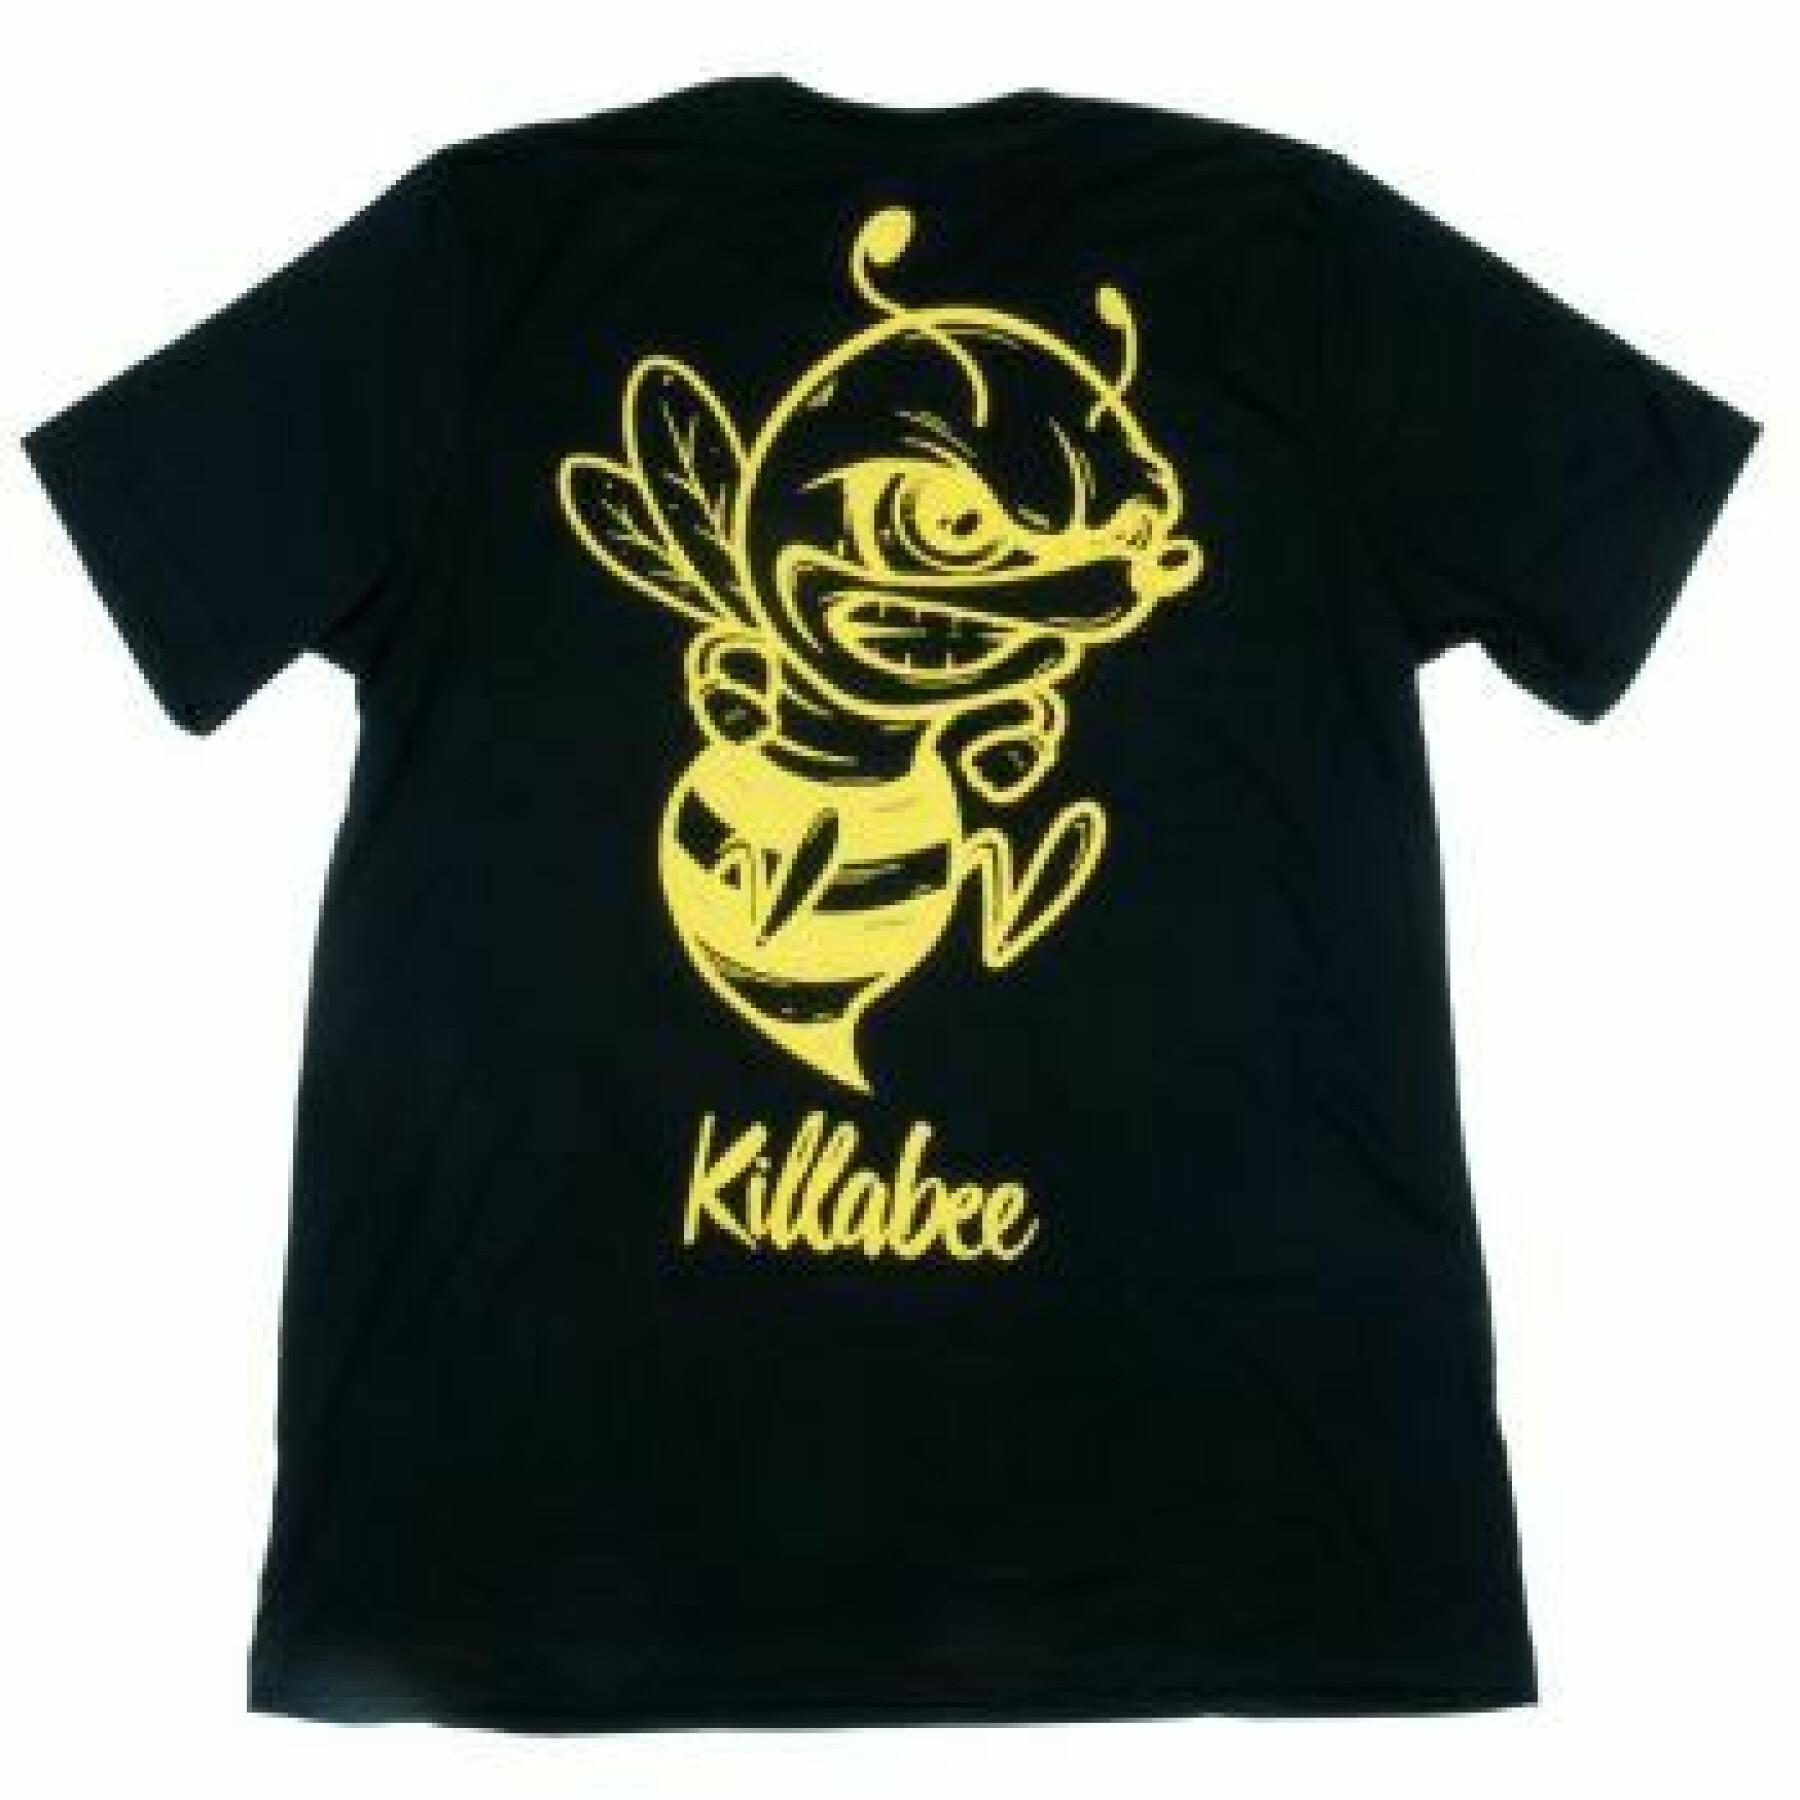 Koszulka Total-BMX Killabee